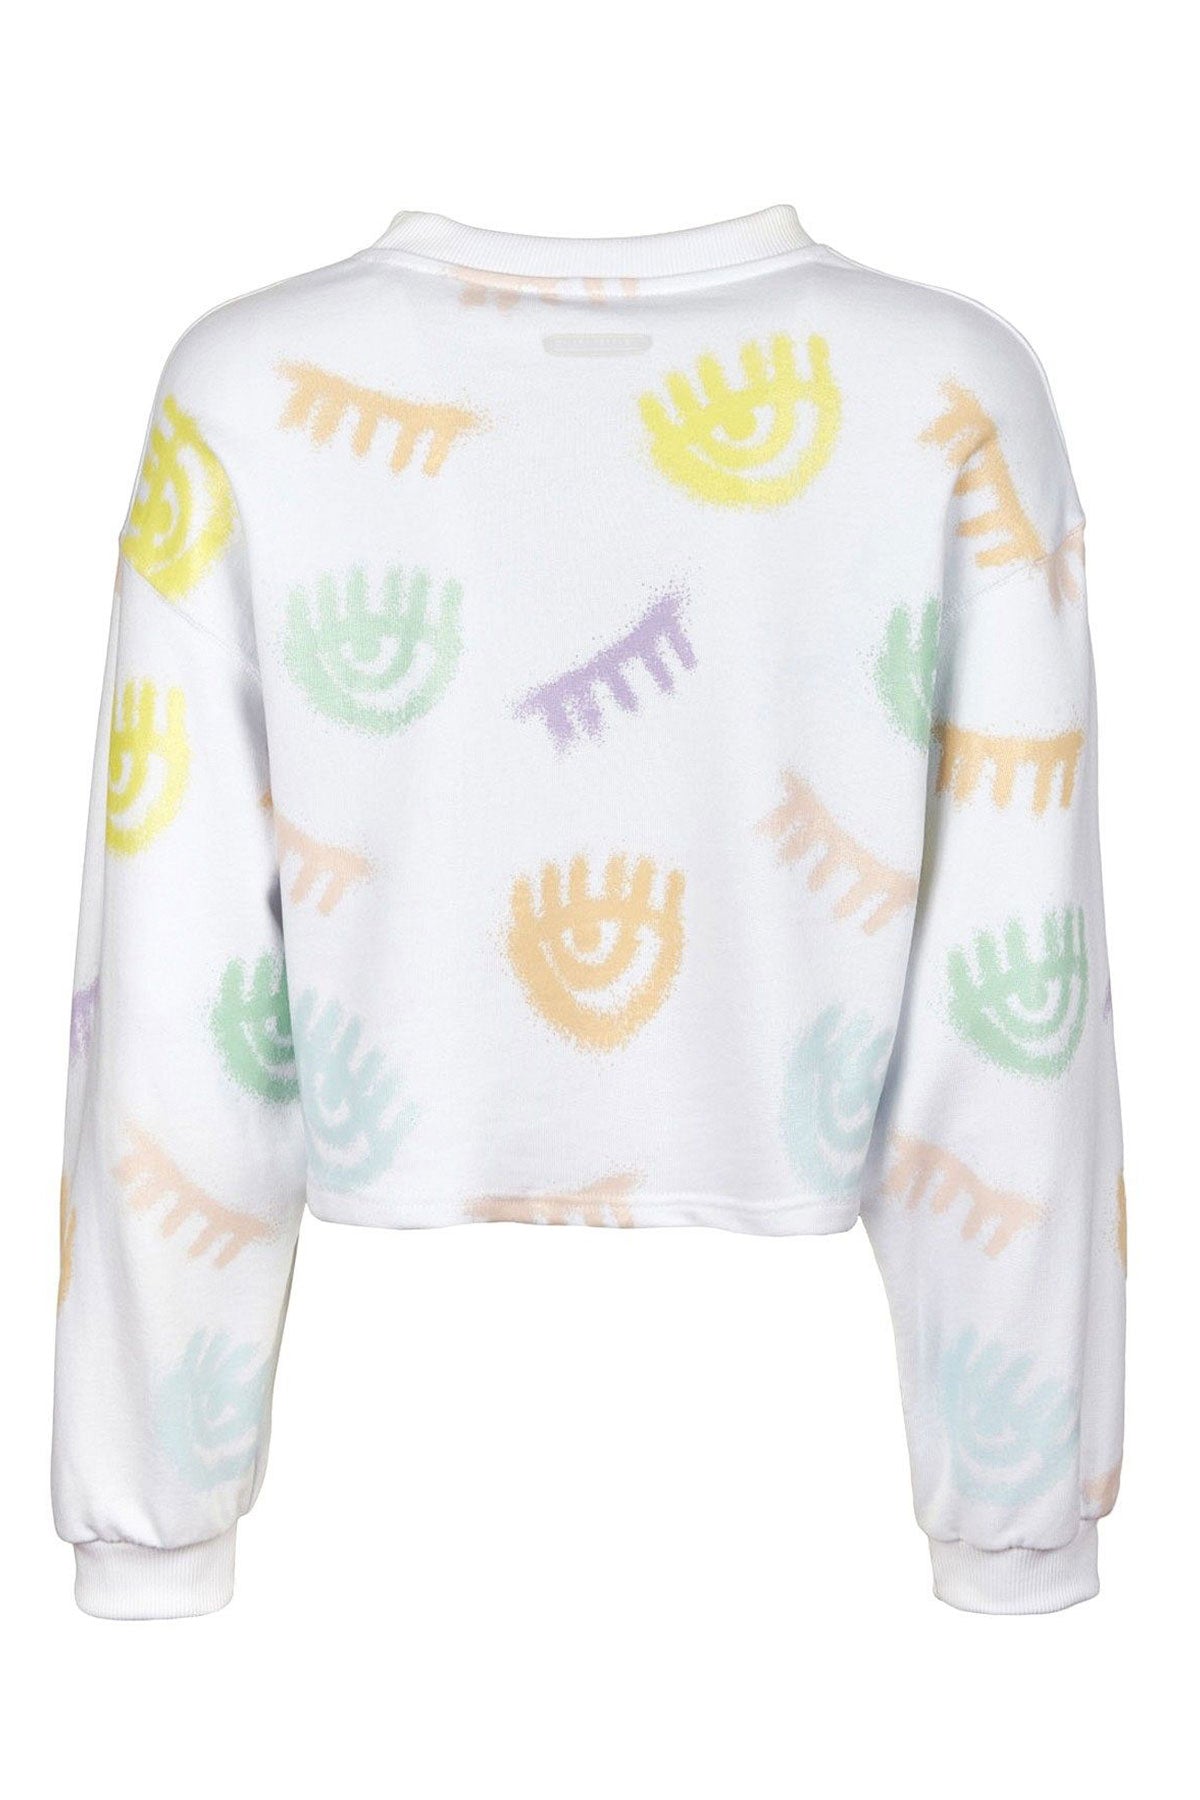 Chiara Ferragni Crop Top Sweatshirt-Libas Trendy Fashion Store